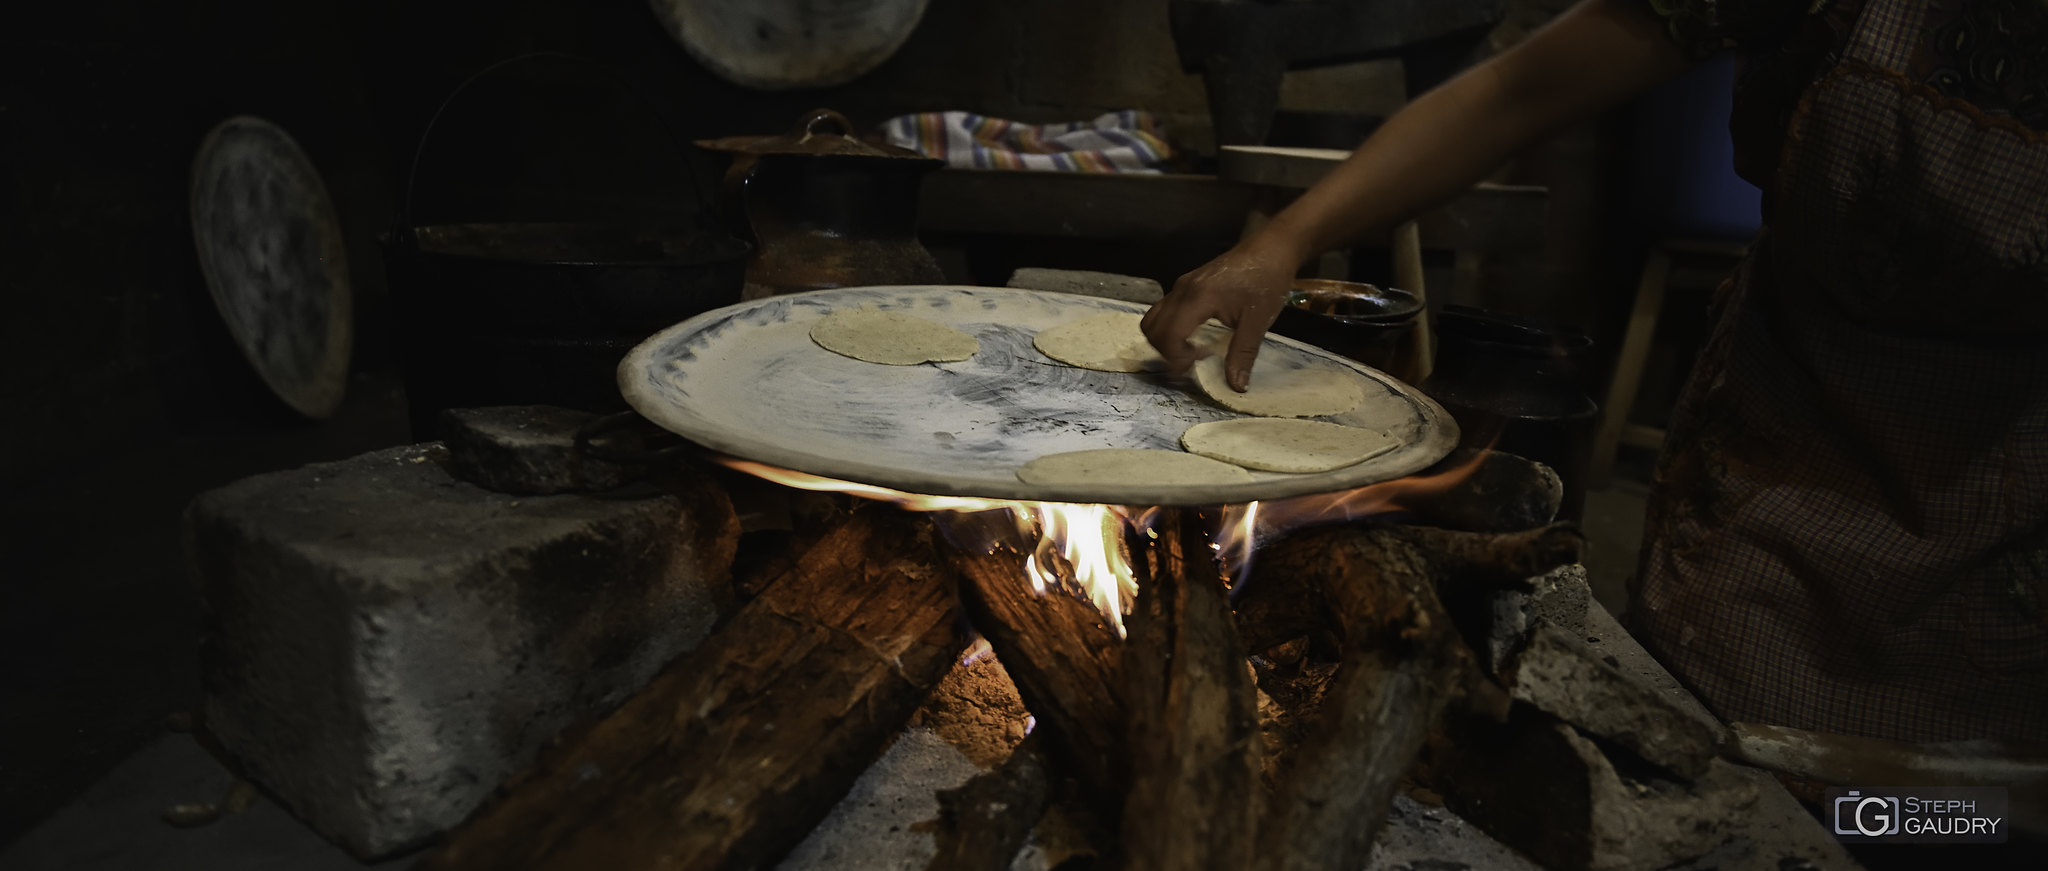 Tacos mexicanos - cocinar a fuego de leña [Klicken Sie hier, um die Diashow zu starten]